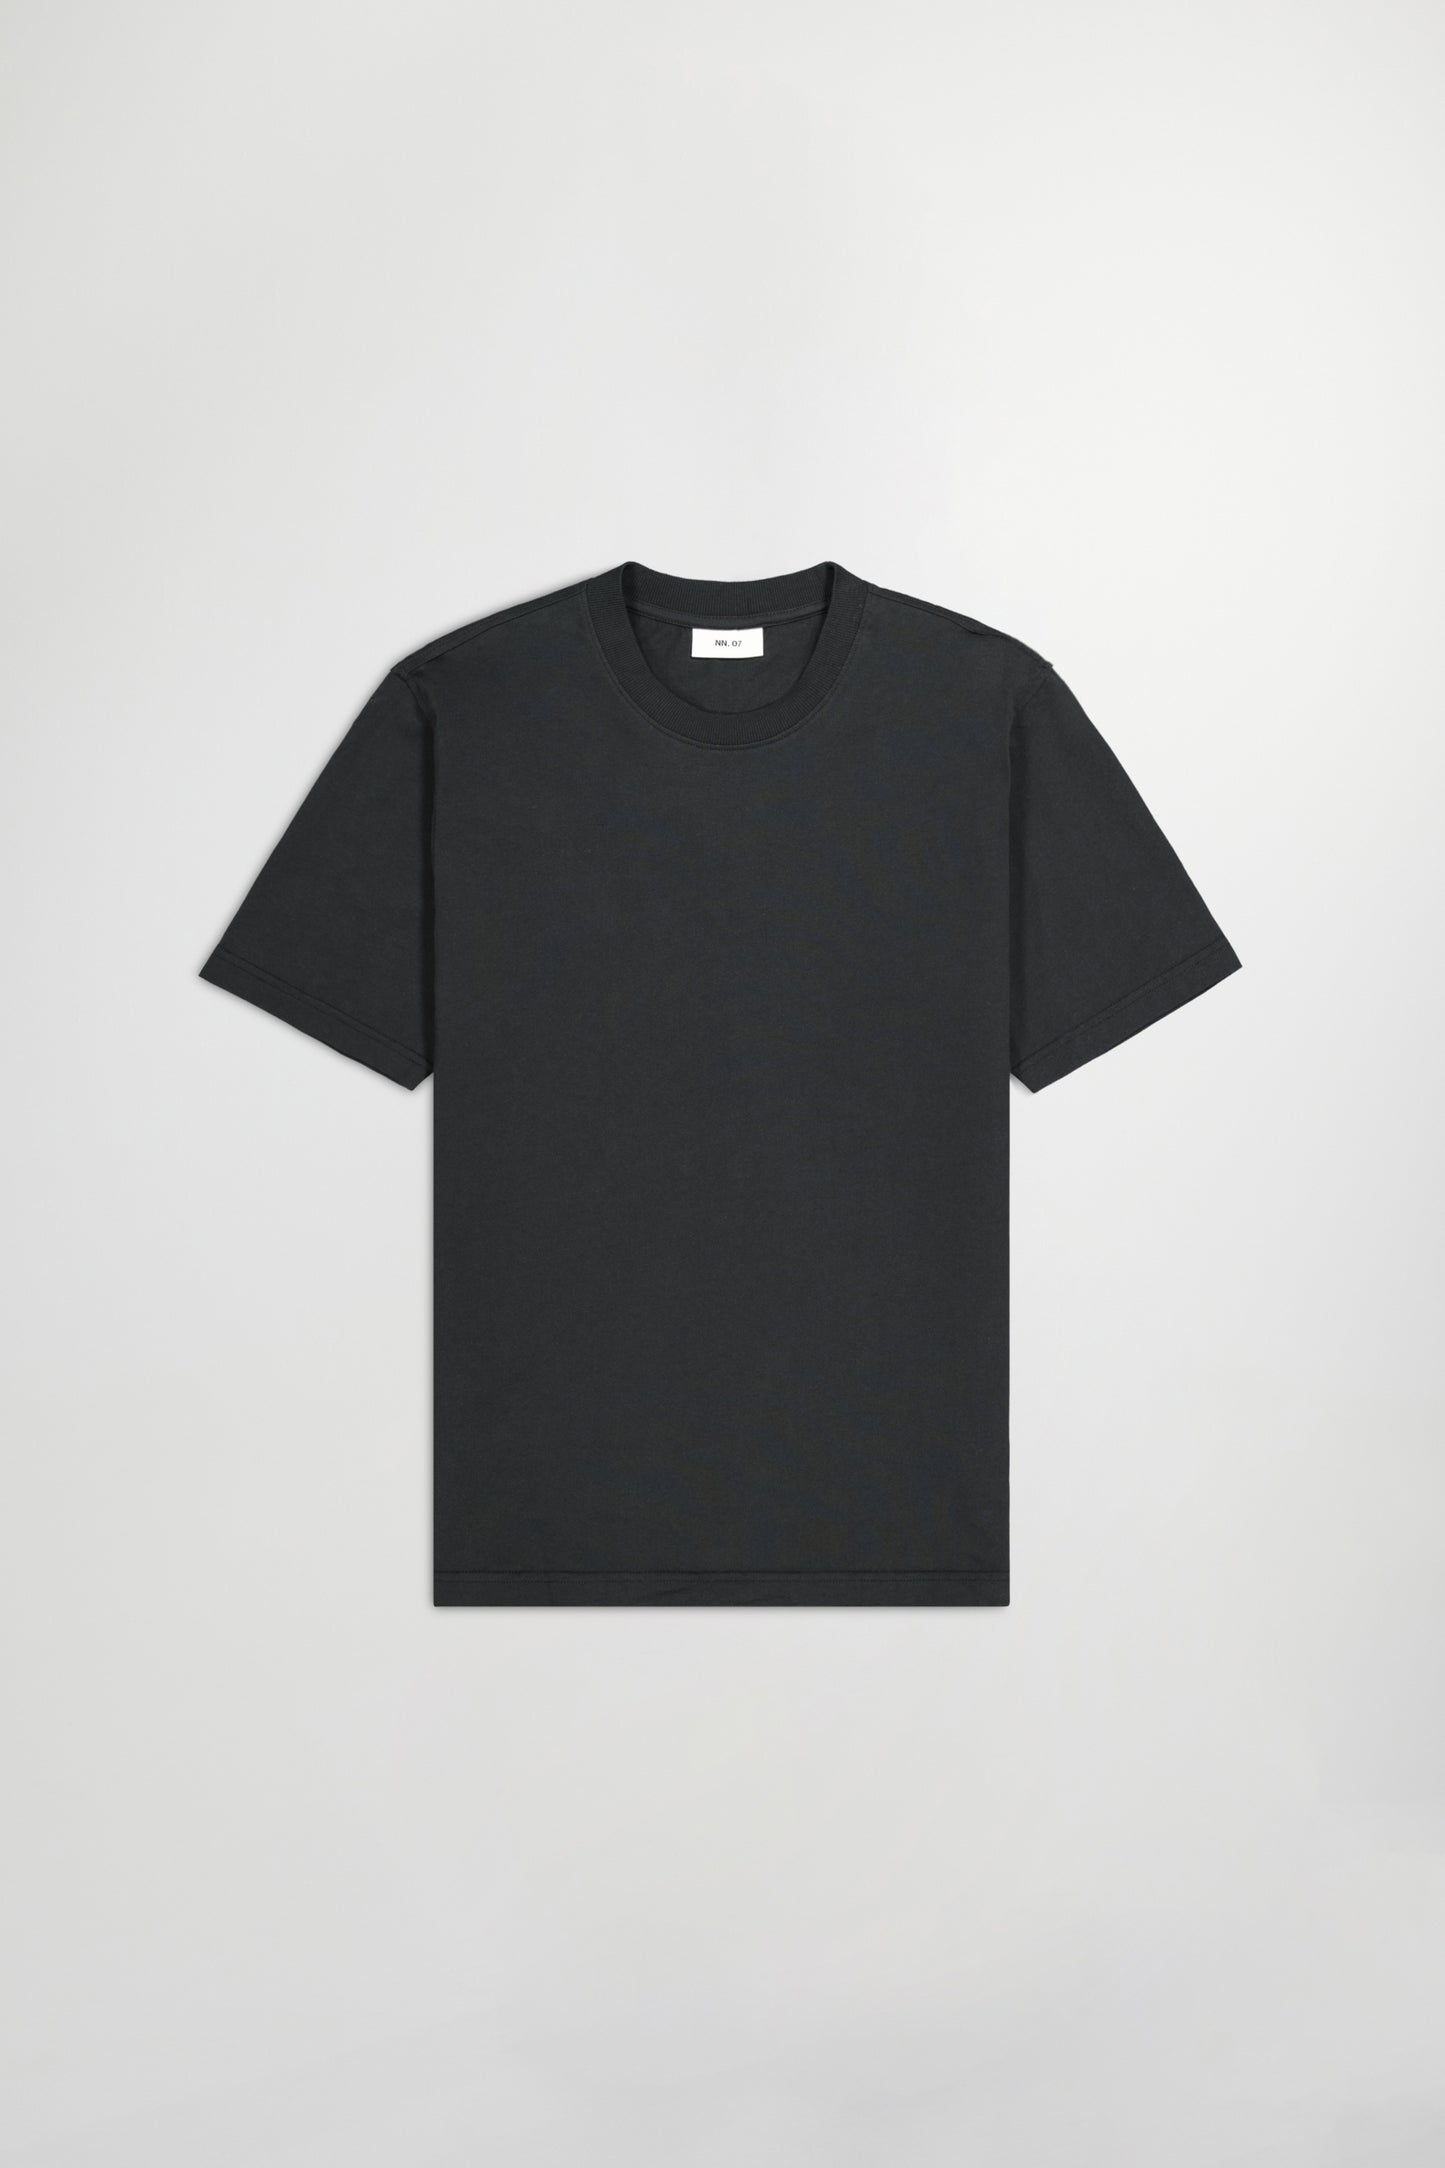 NN07 Adam EMB Black T-shirt 3209- 999